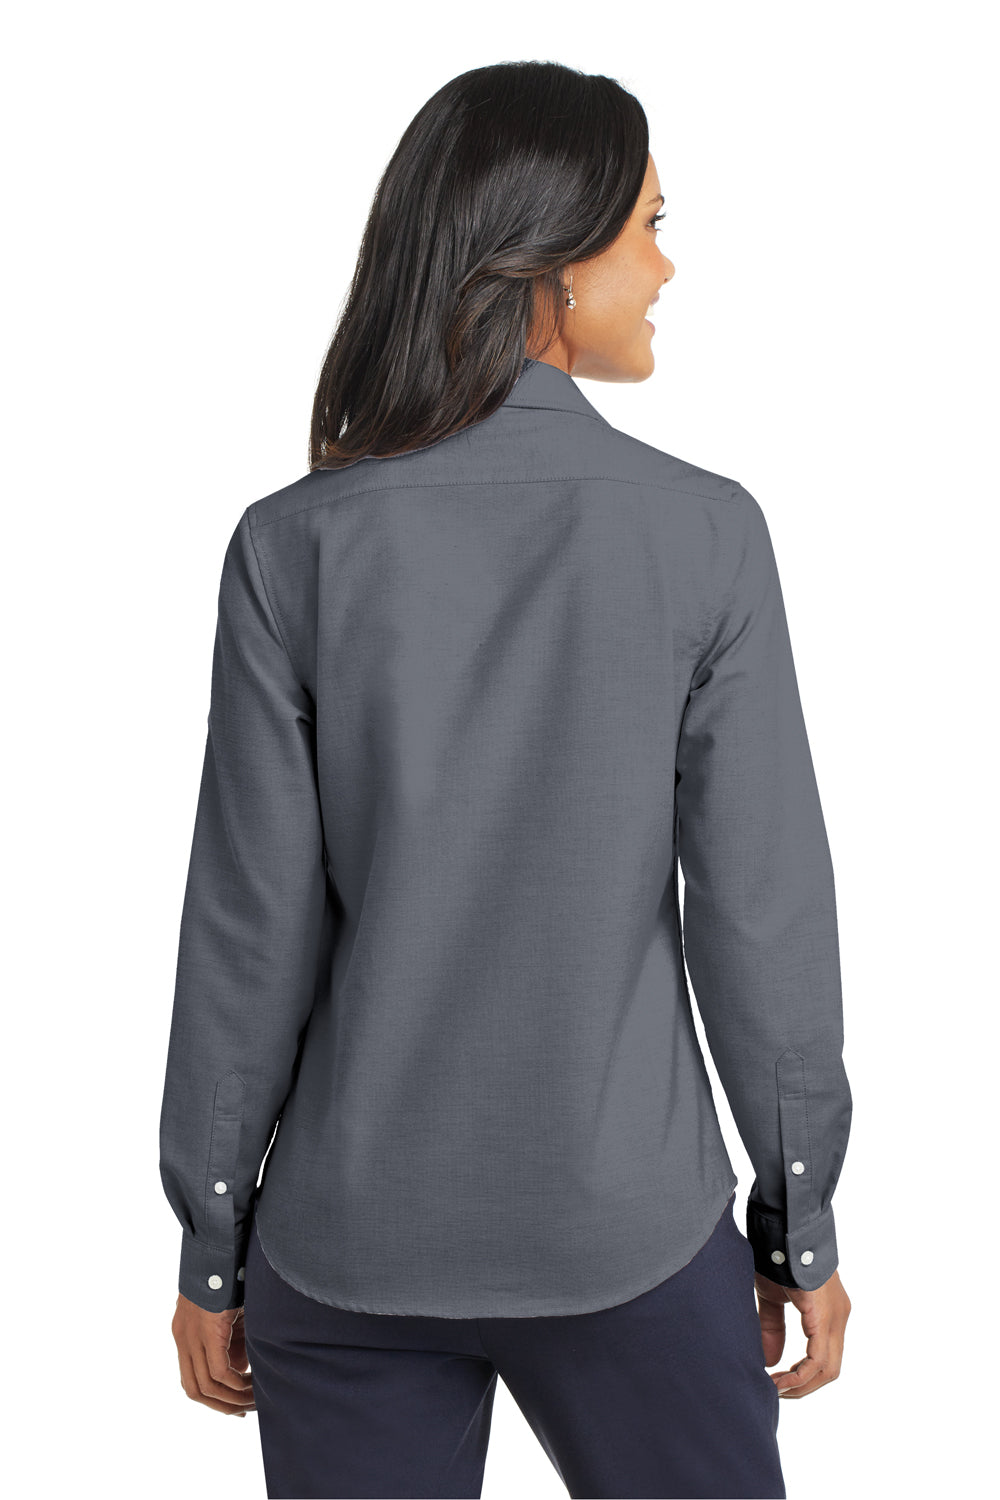 Port Authority L658 Womens SuperPro Oxford Wrinkle Resistant Long Sleeve Button Down Shirt Black Back